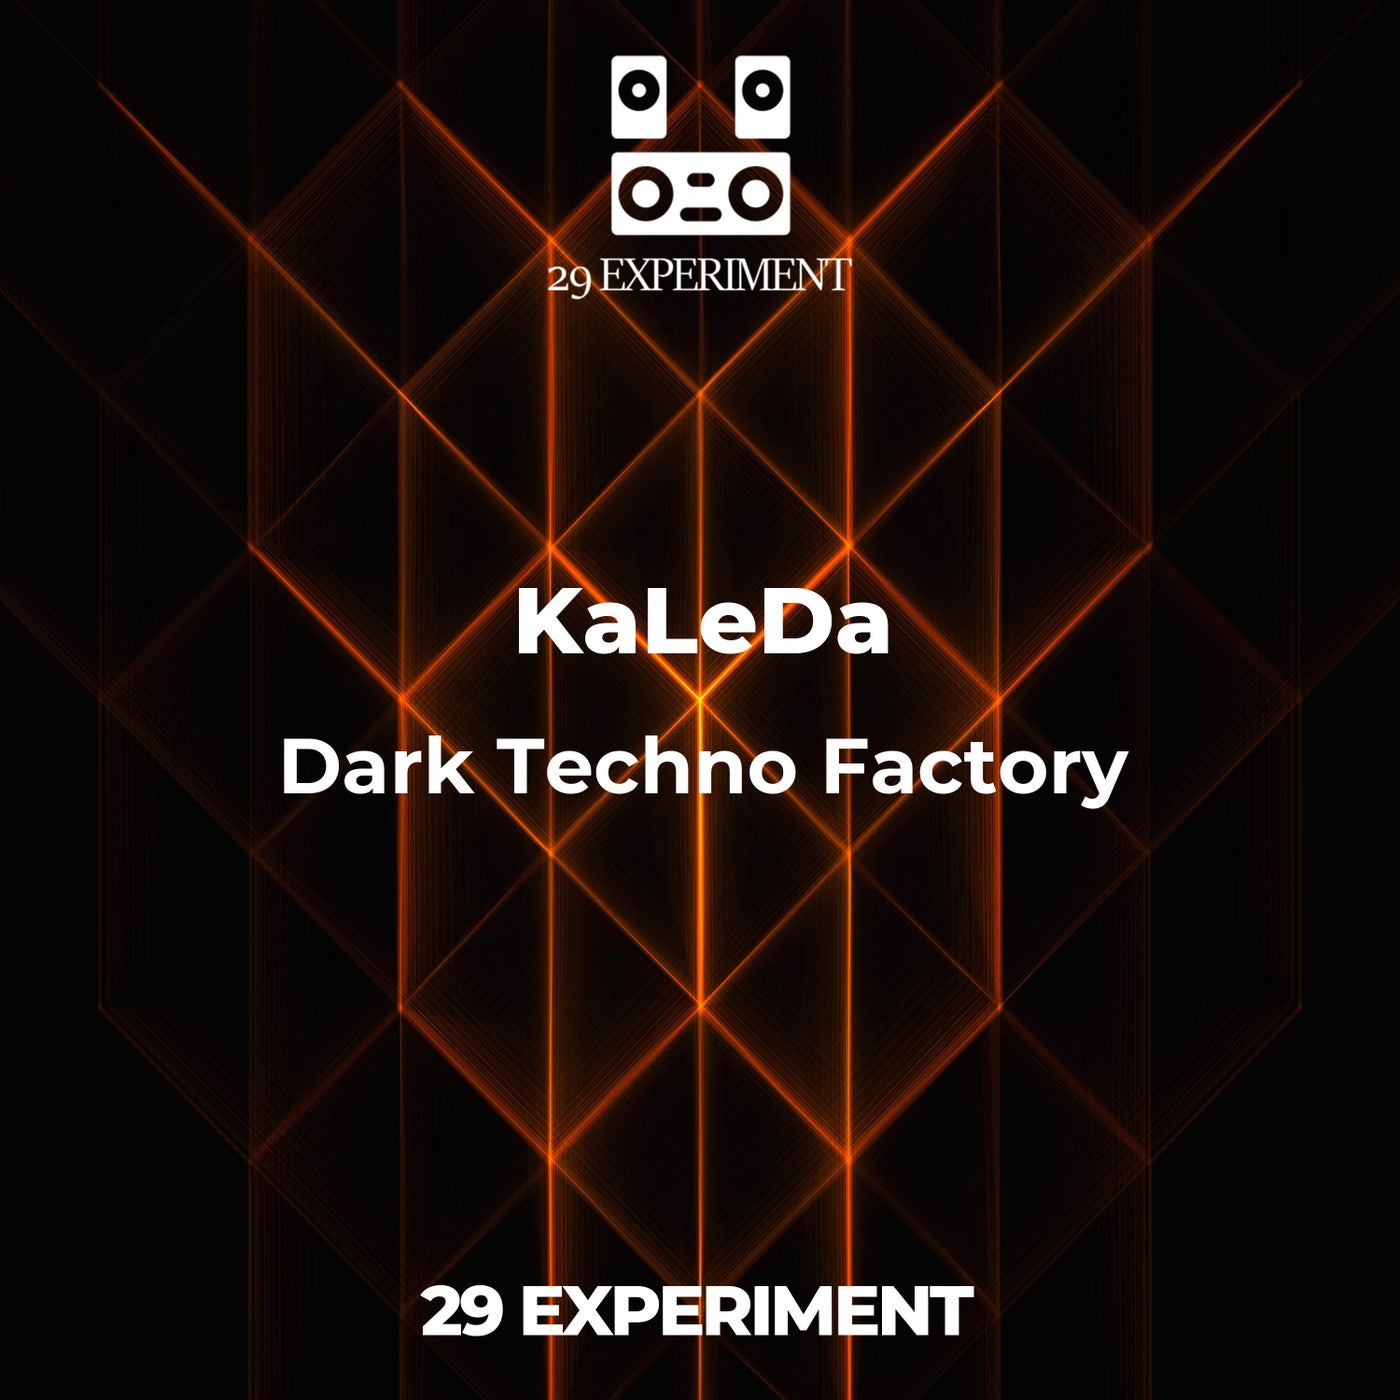 Dark Techno Factory